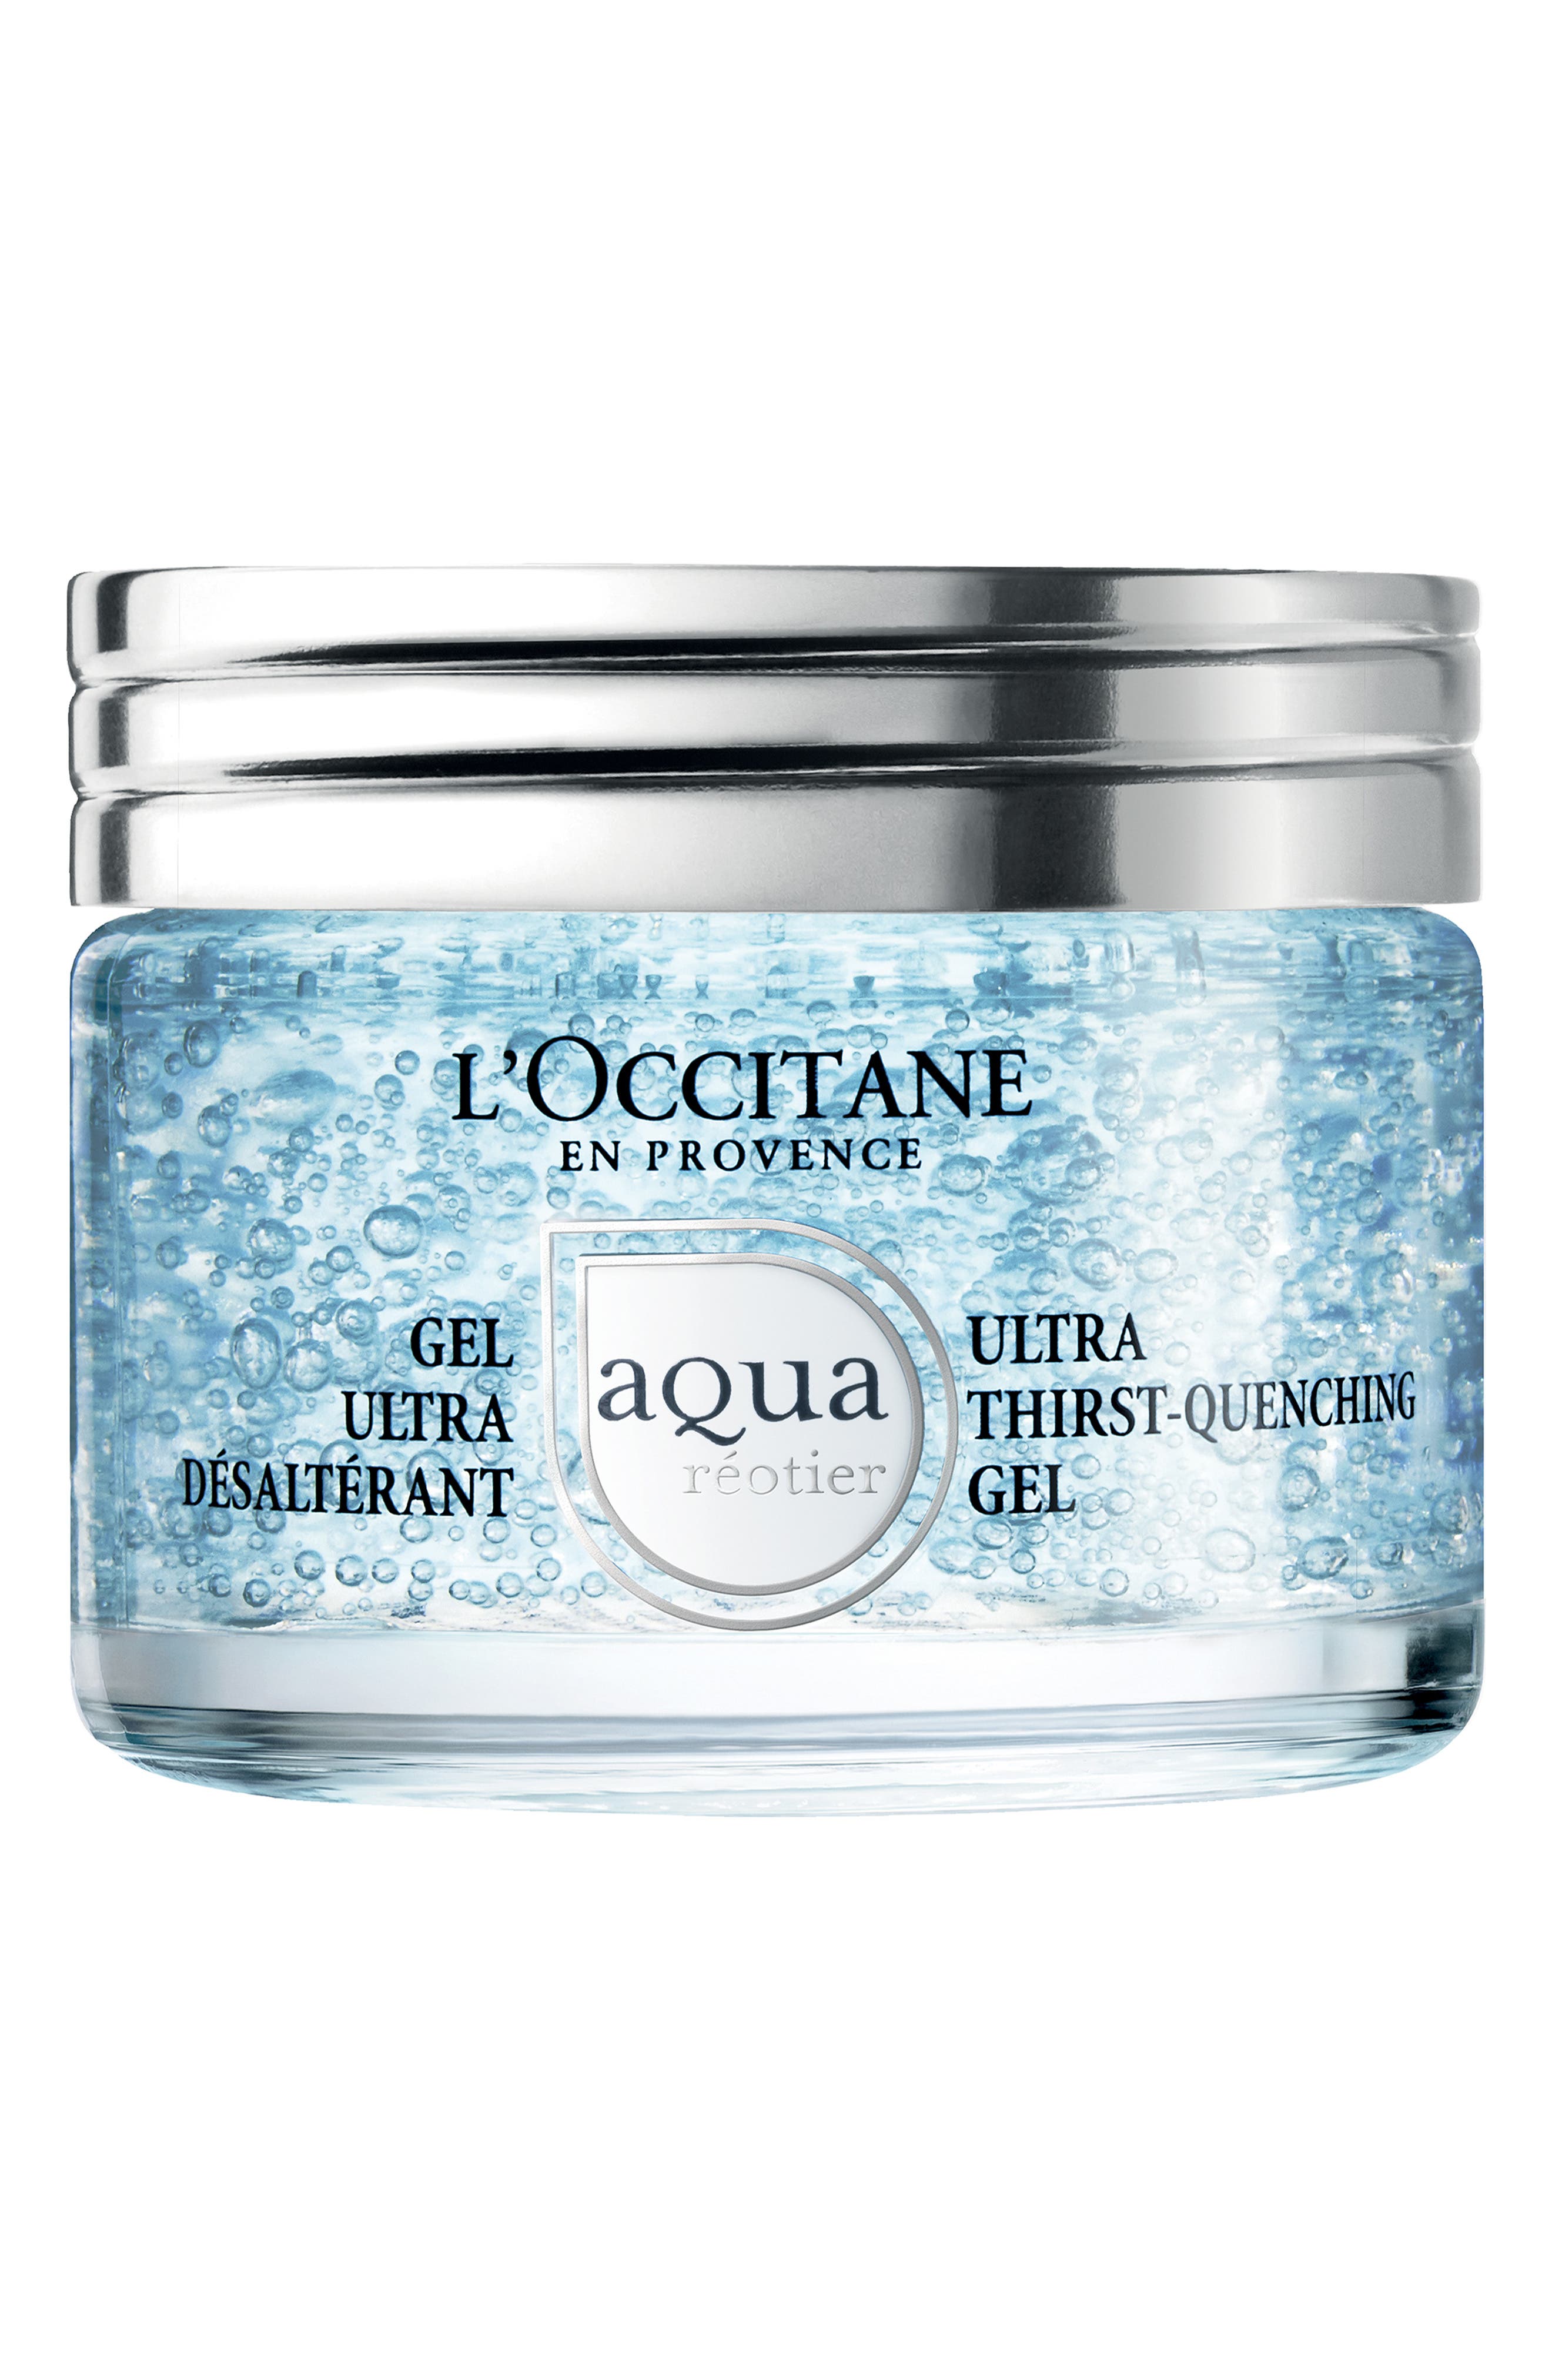 L'Occitane Aqua Reotier Ultra Thirst-Quenching Gel